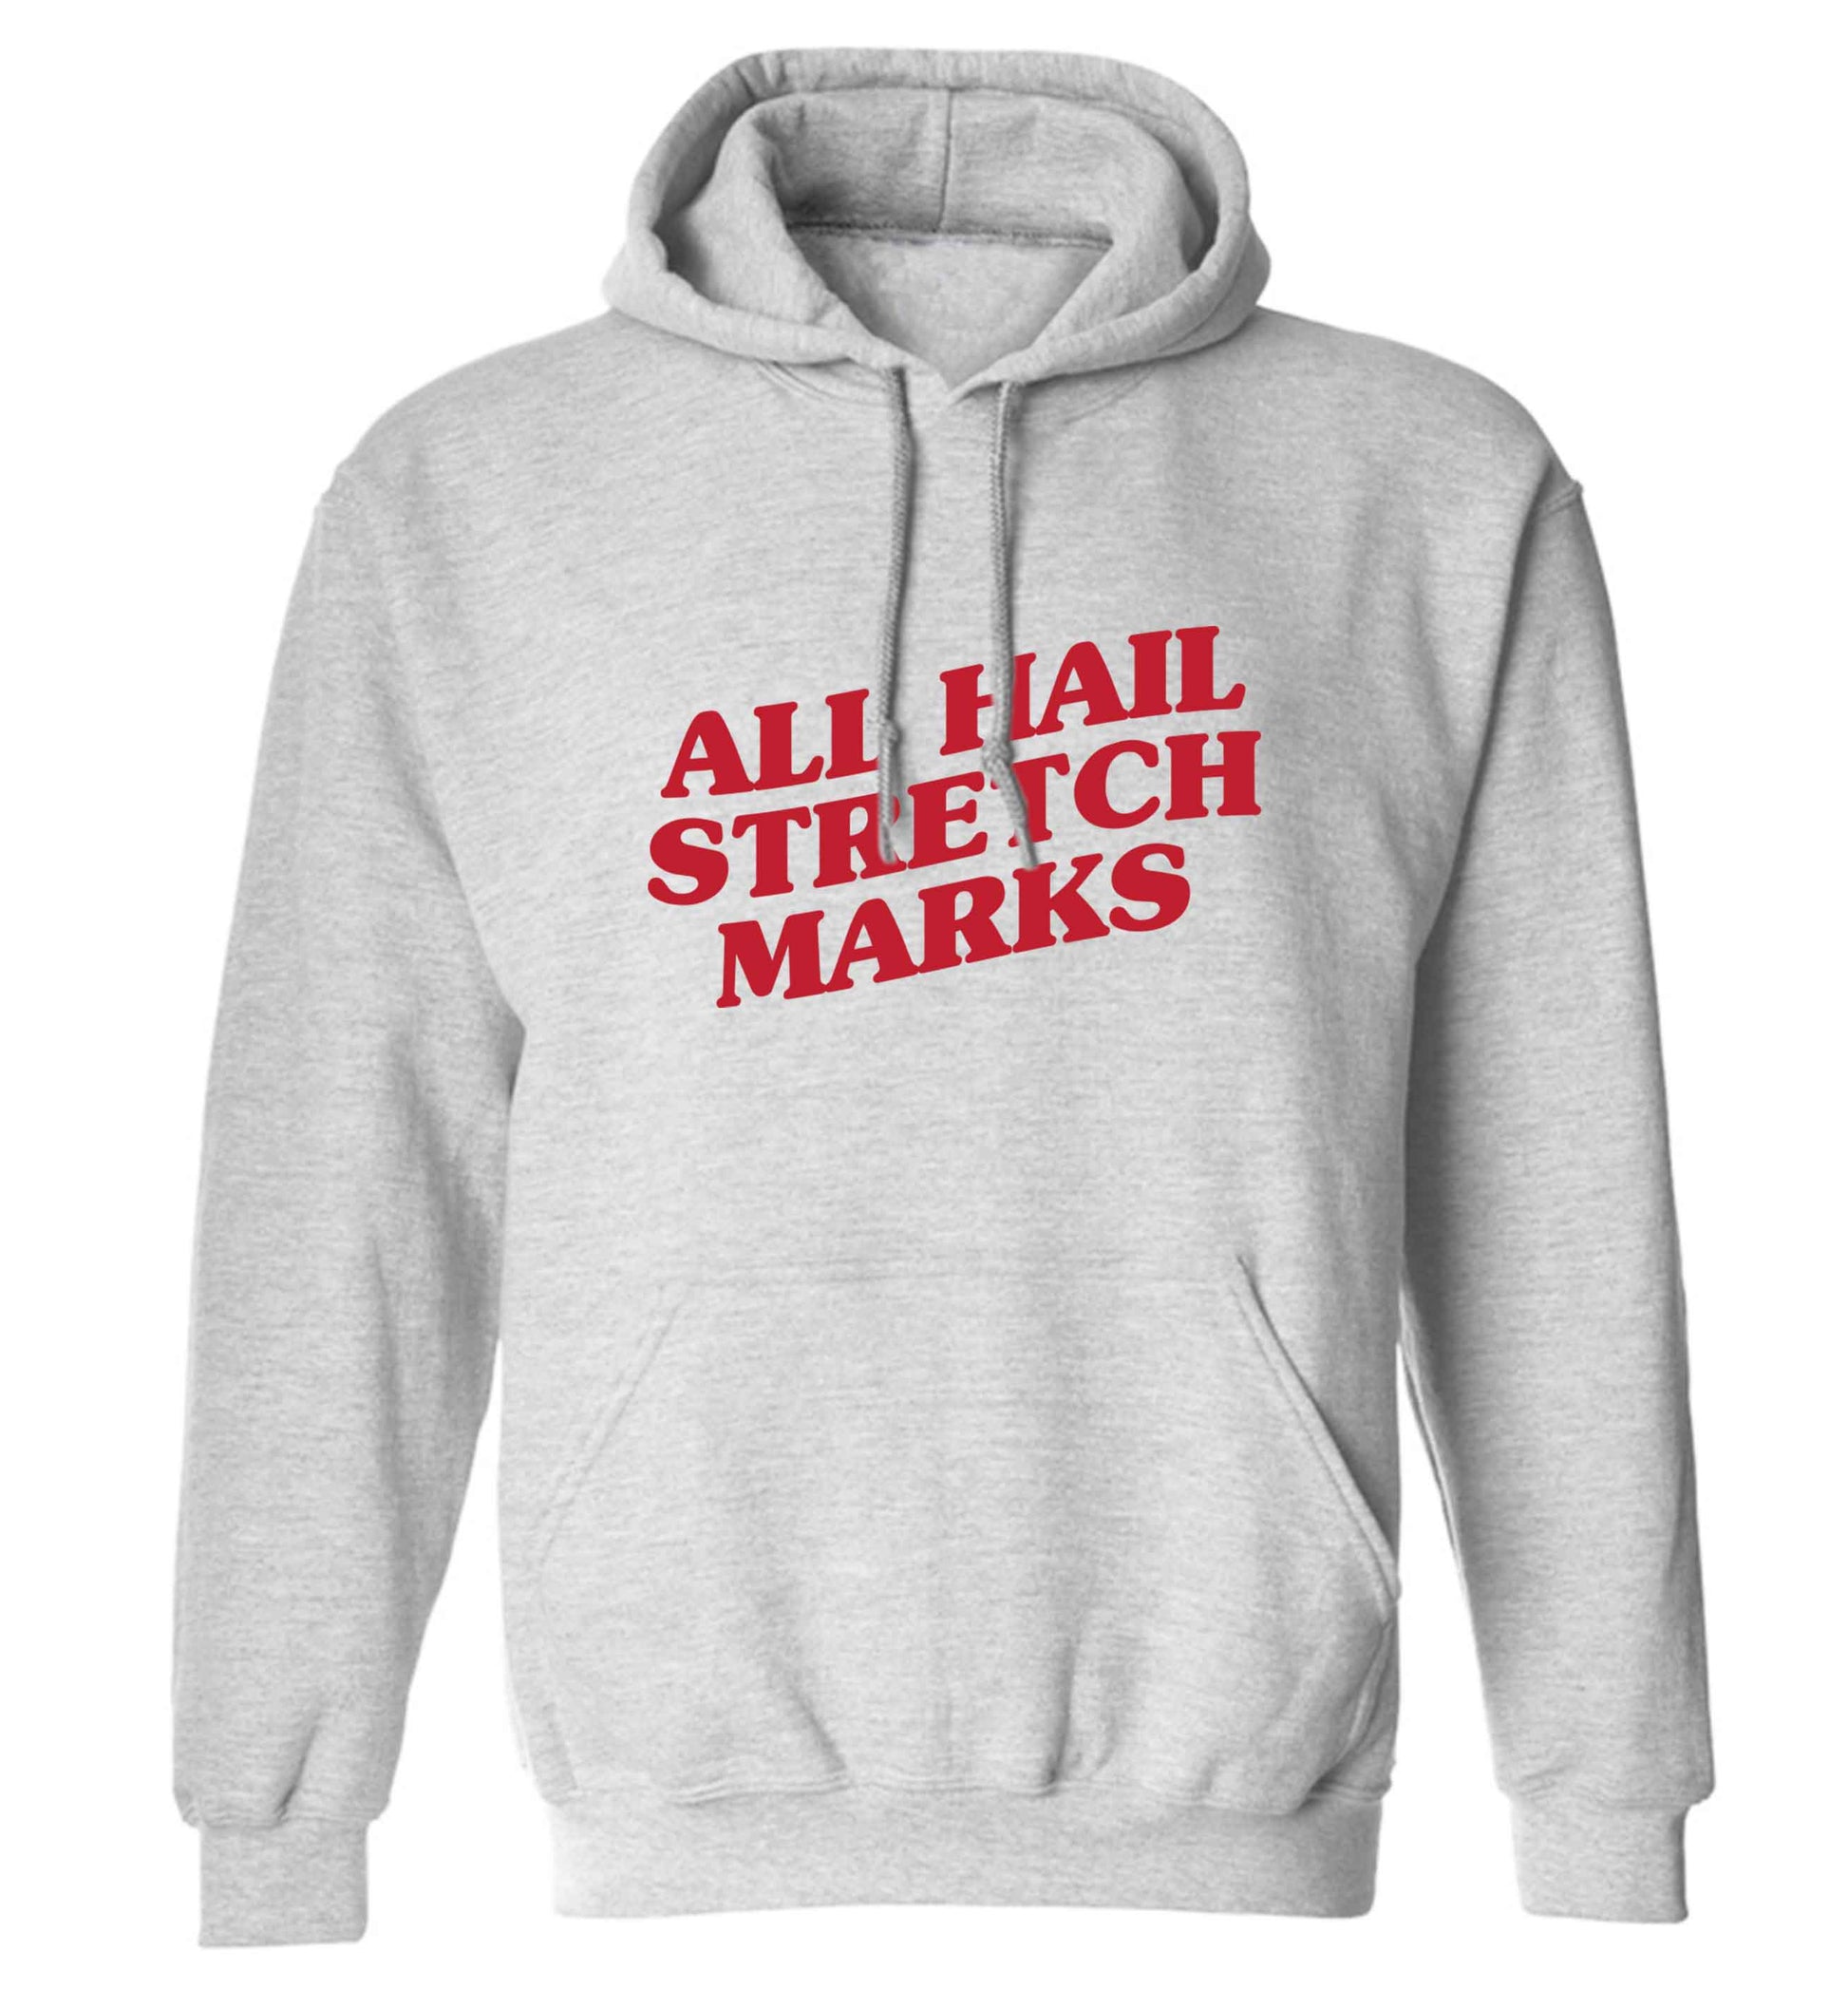 All hail stretch marks adults unisex grey hoodie 2XL